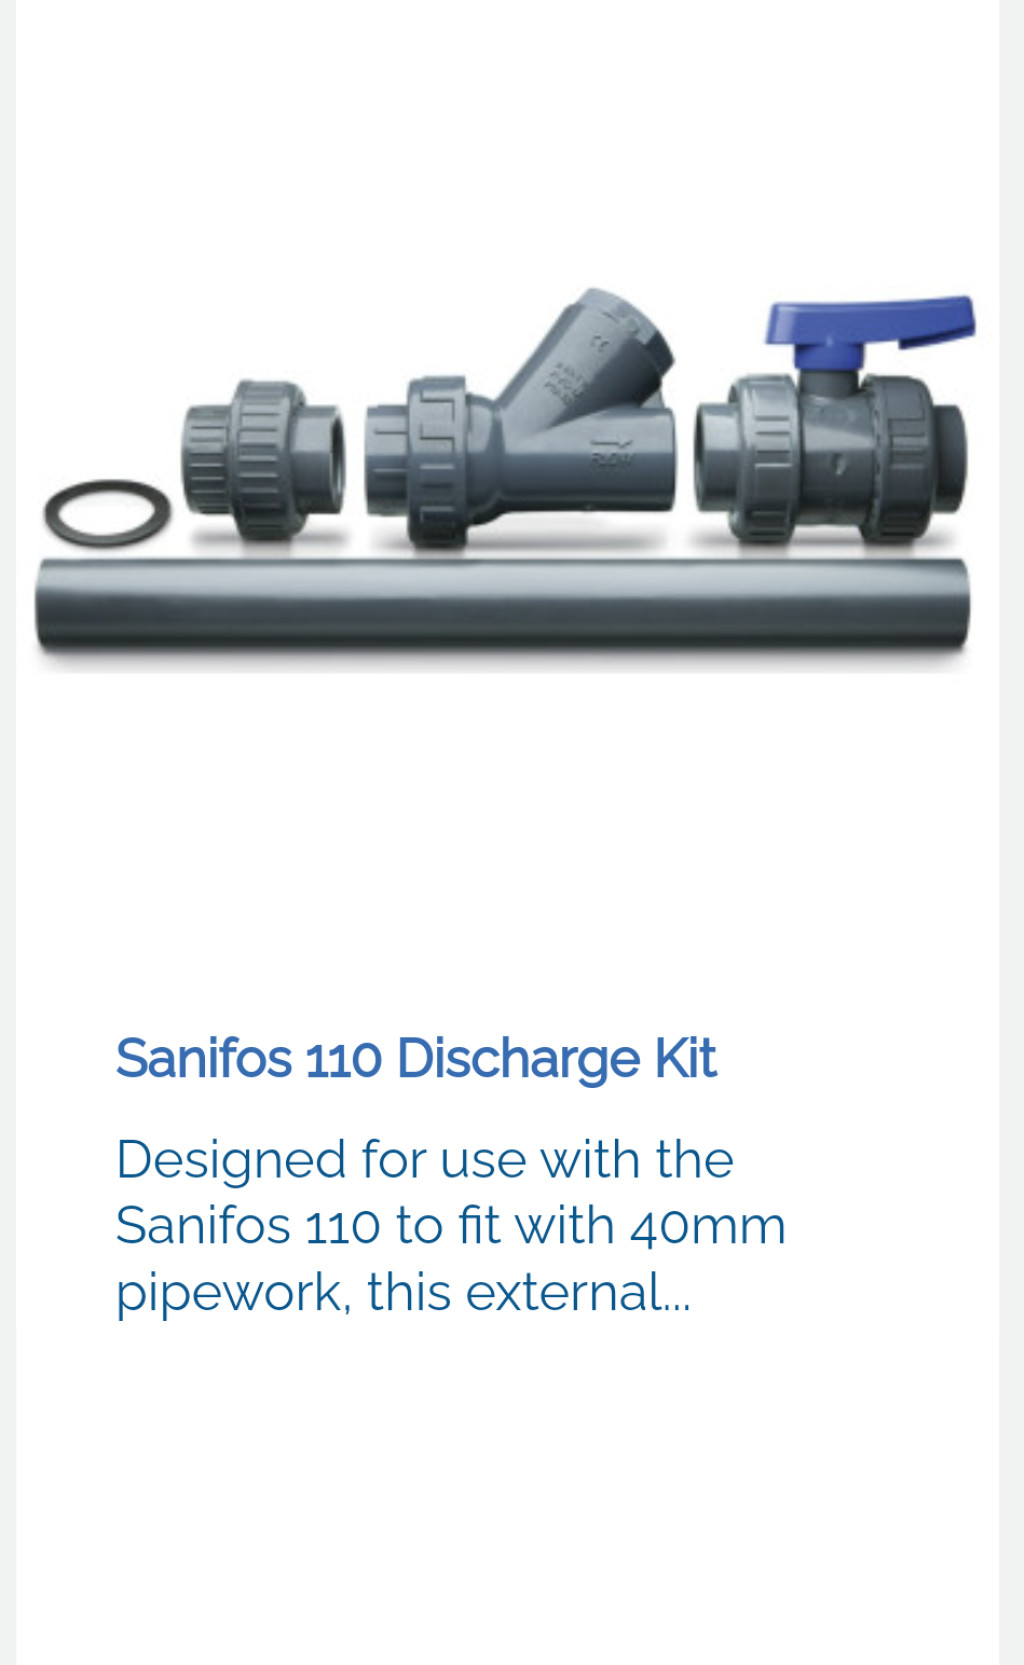 Optional accessory Sanifos 110